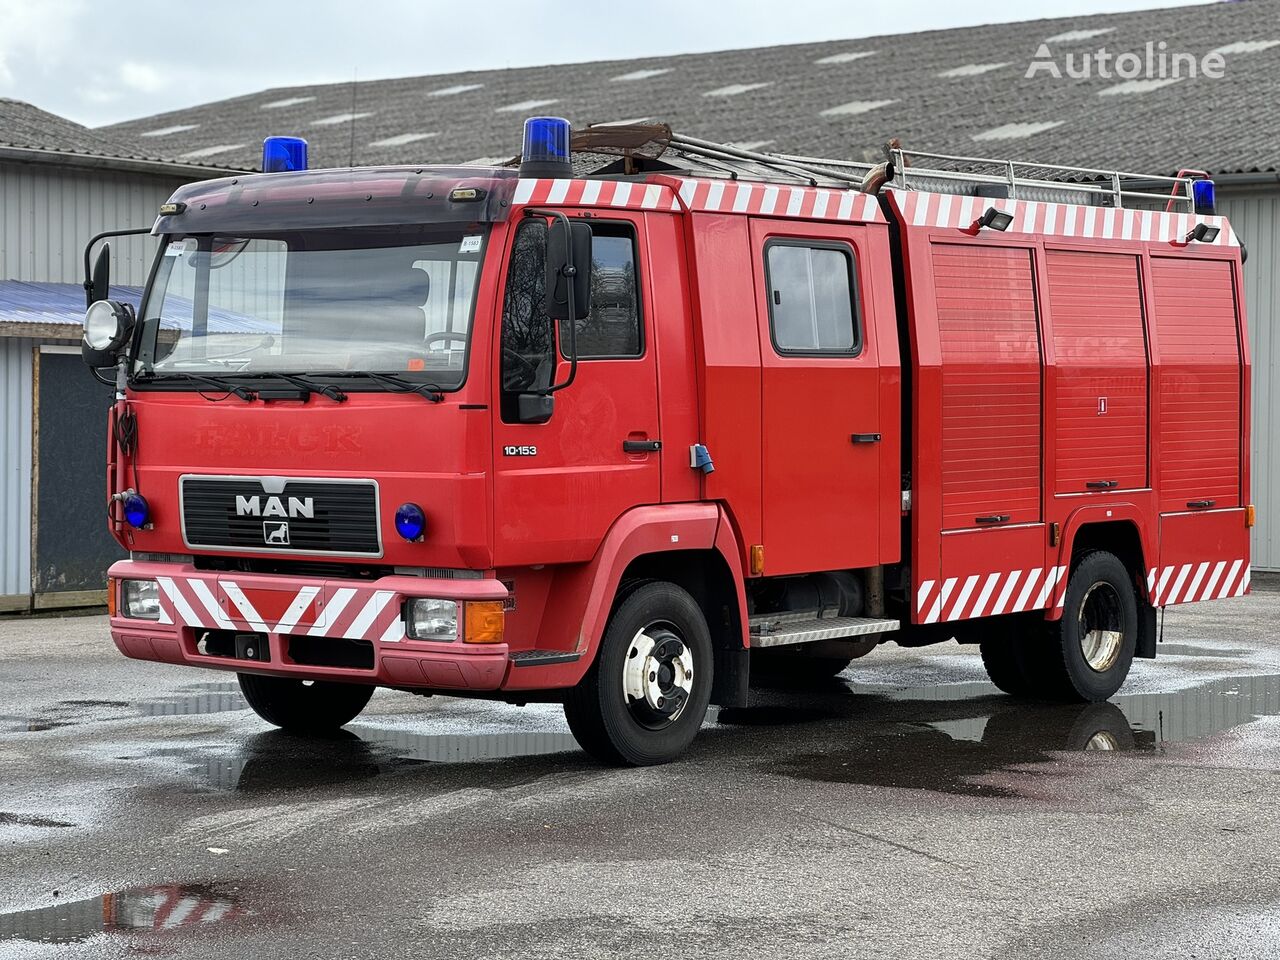 MAN 10.153 H.F.NIELSEN - RUBERG 2.000 Liter fire truck